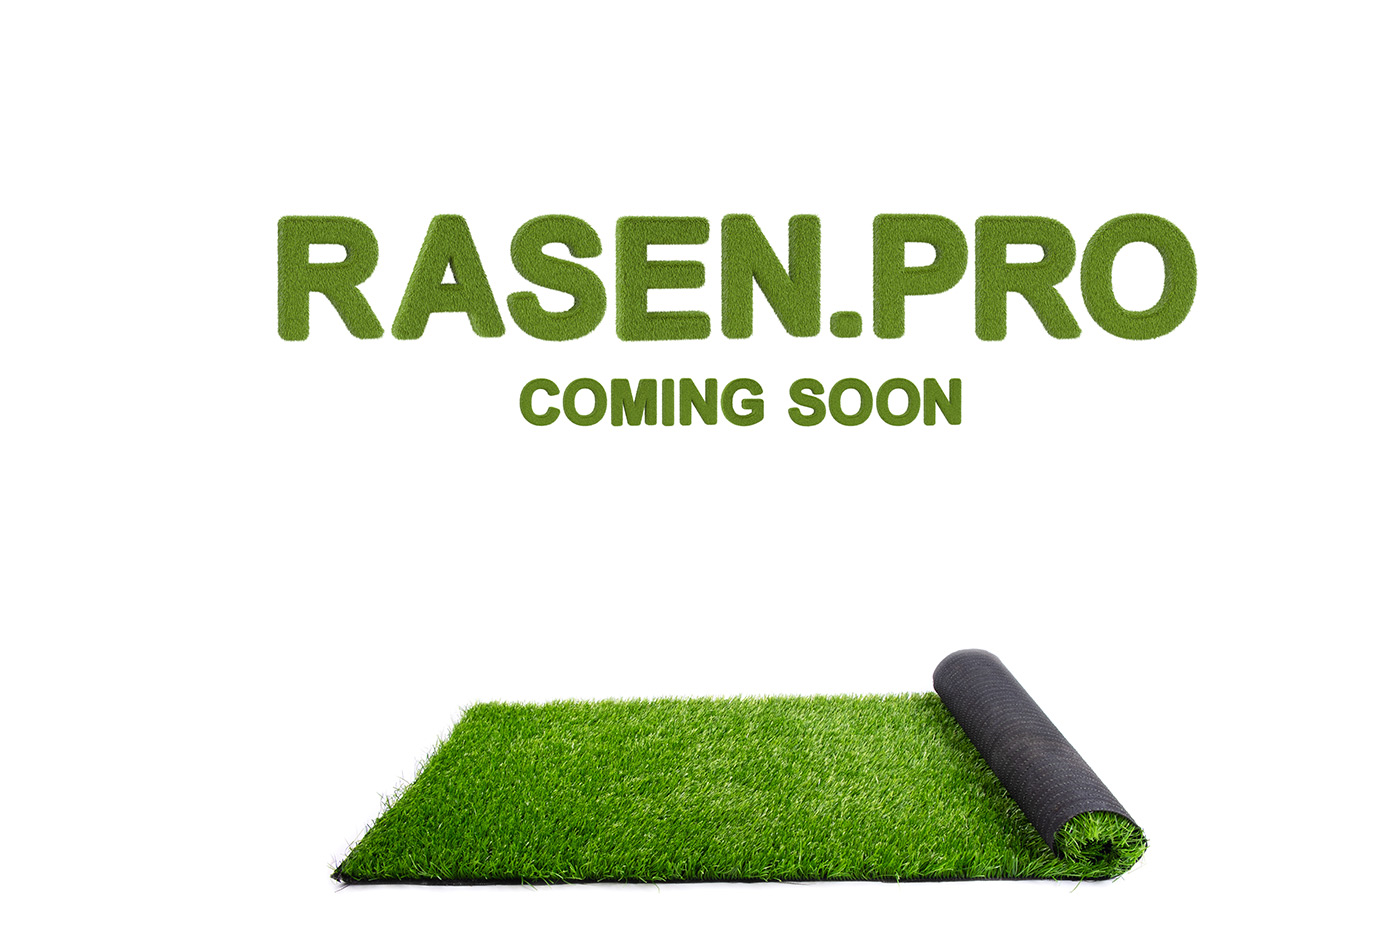 Rasenpro coming soon